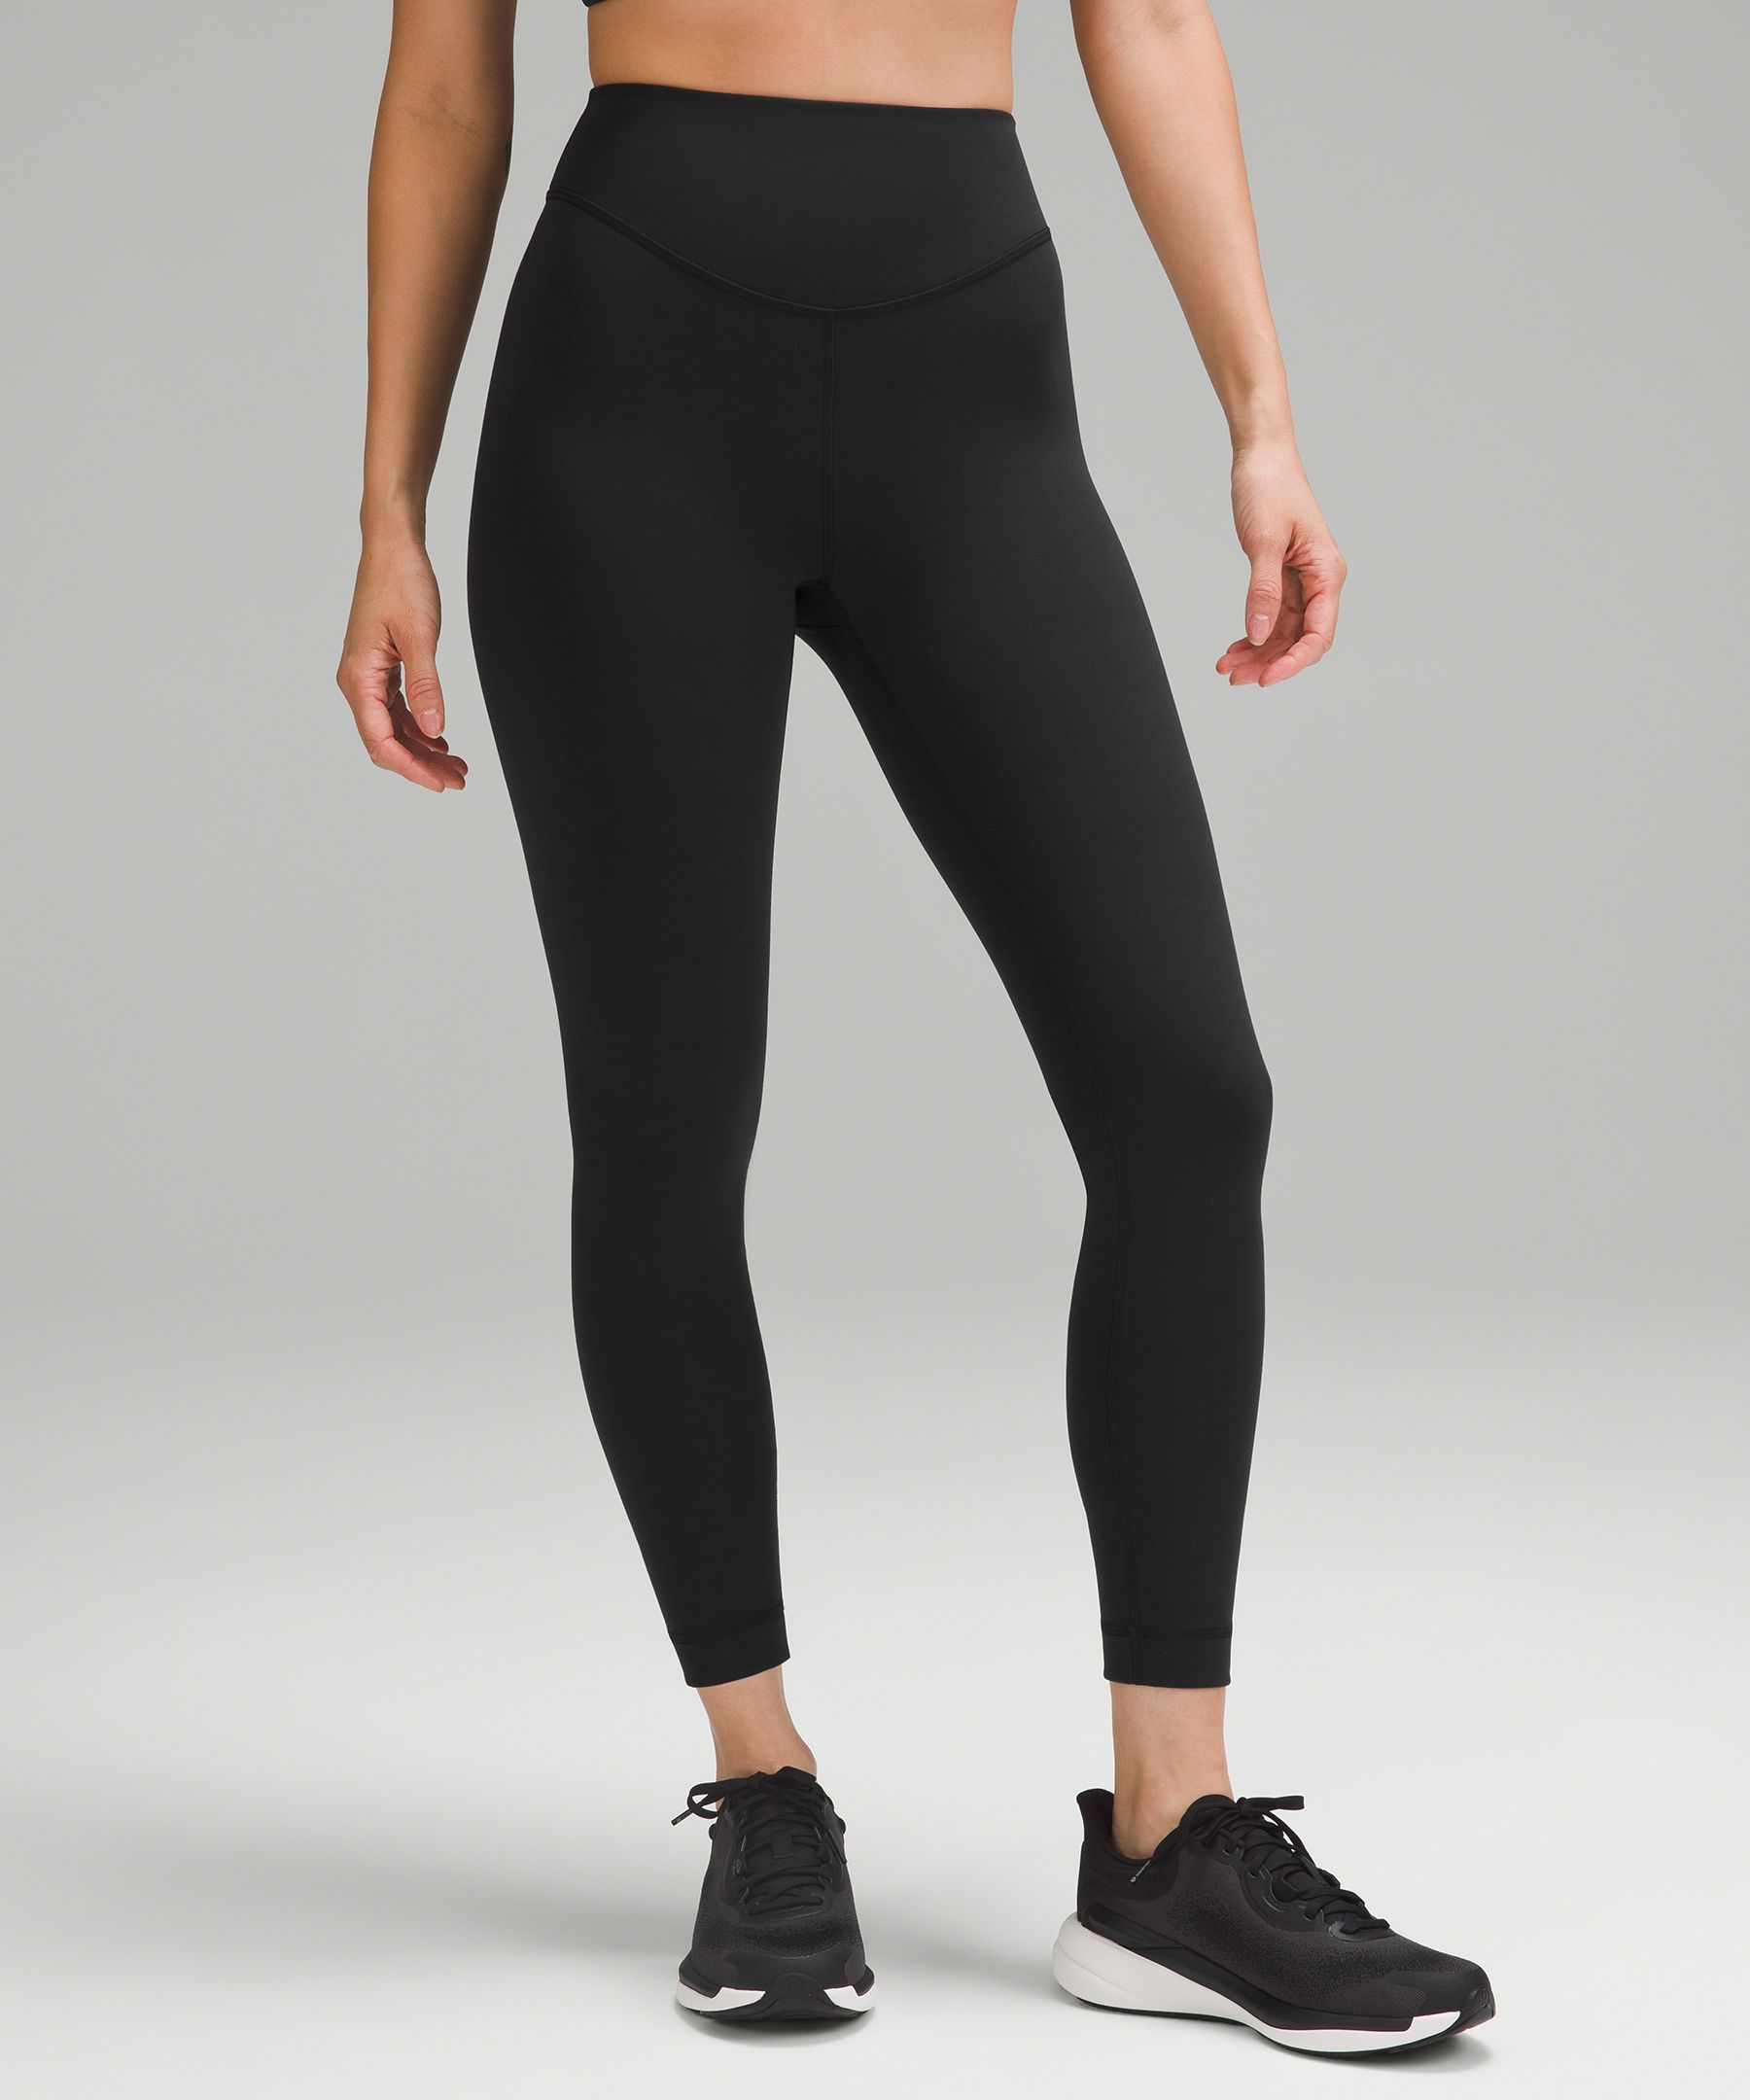 Nike Women's Tech Pack Tight Support Bra Size XS Black Chrome